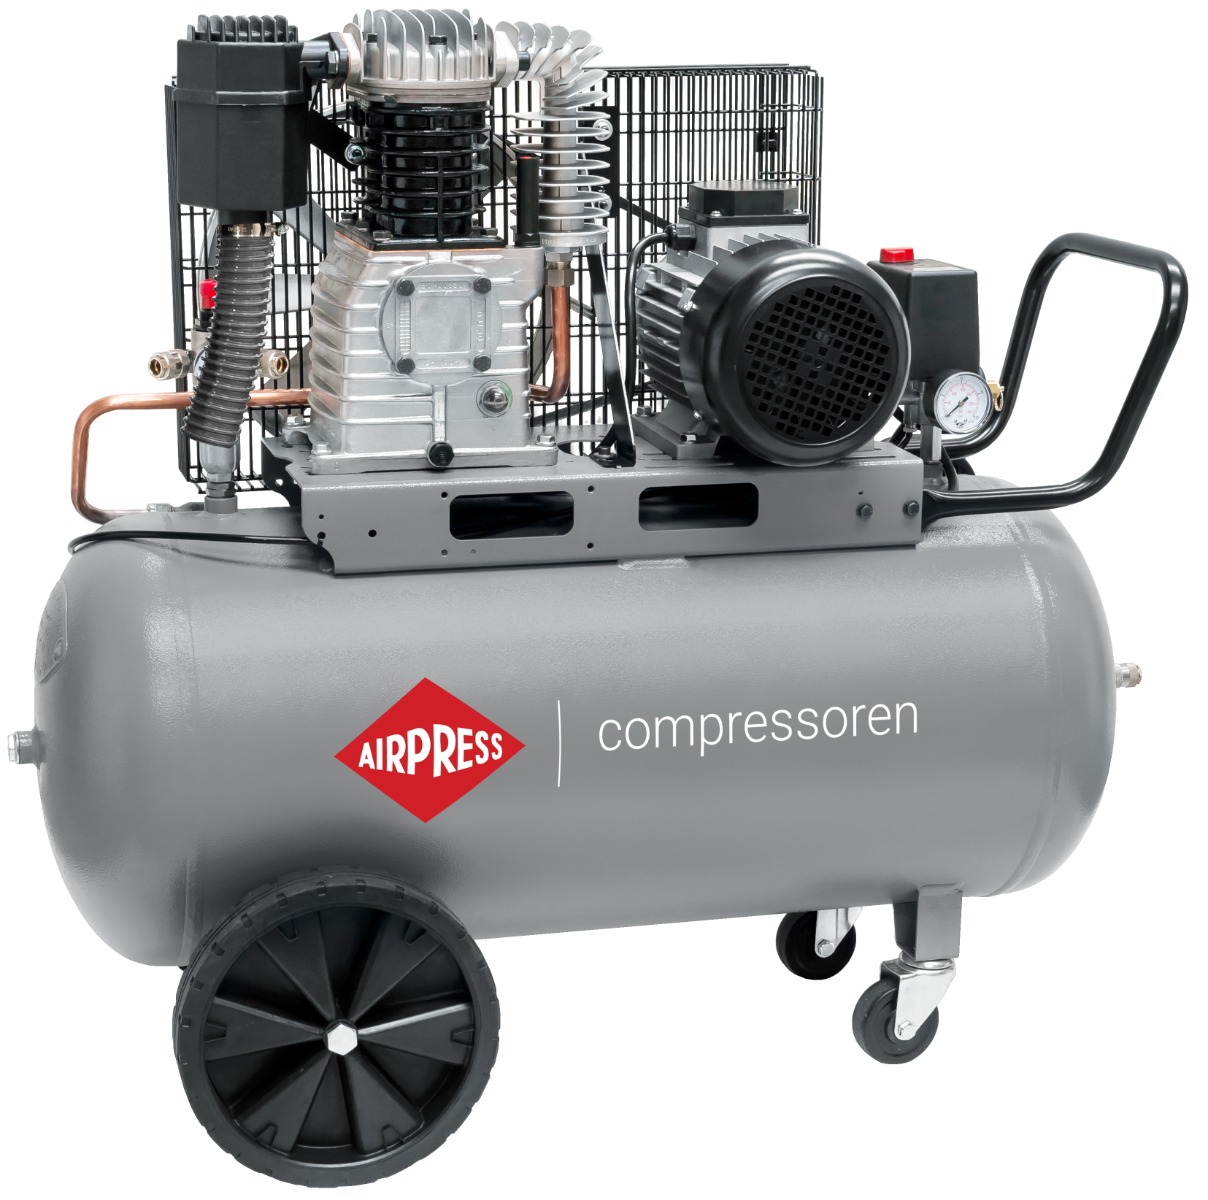 Compresor de aire de una etapa profesional HK 625-90 PRO